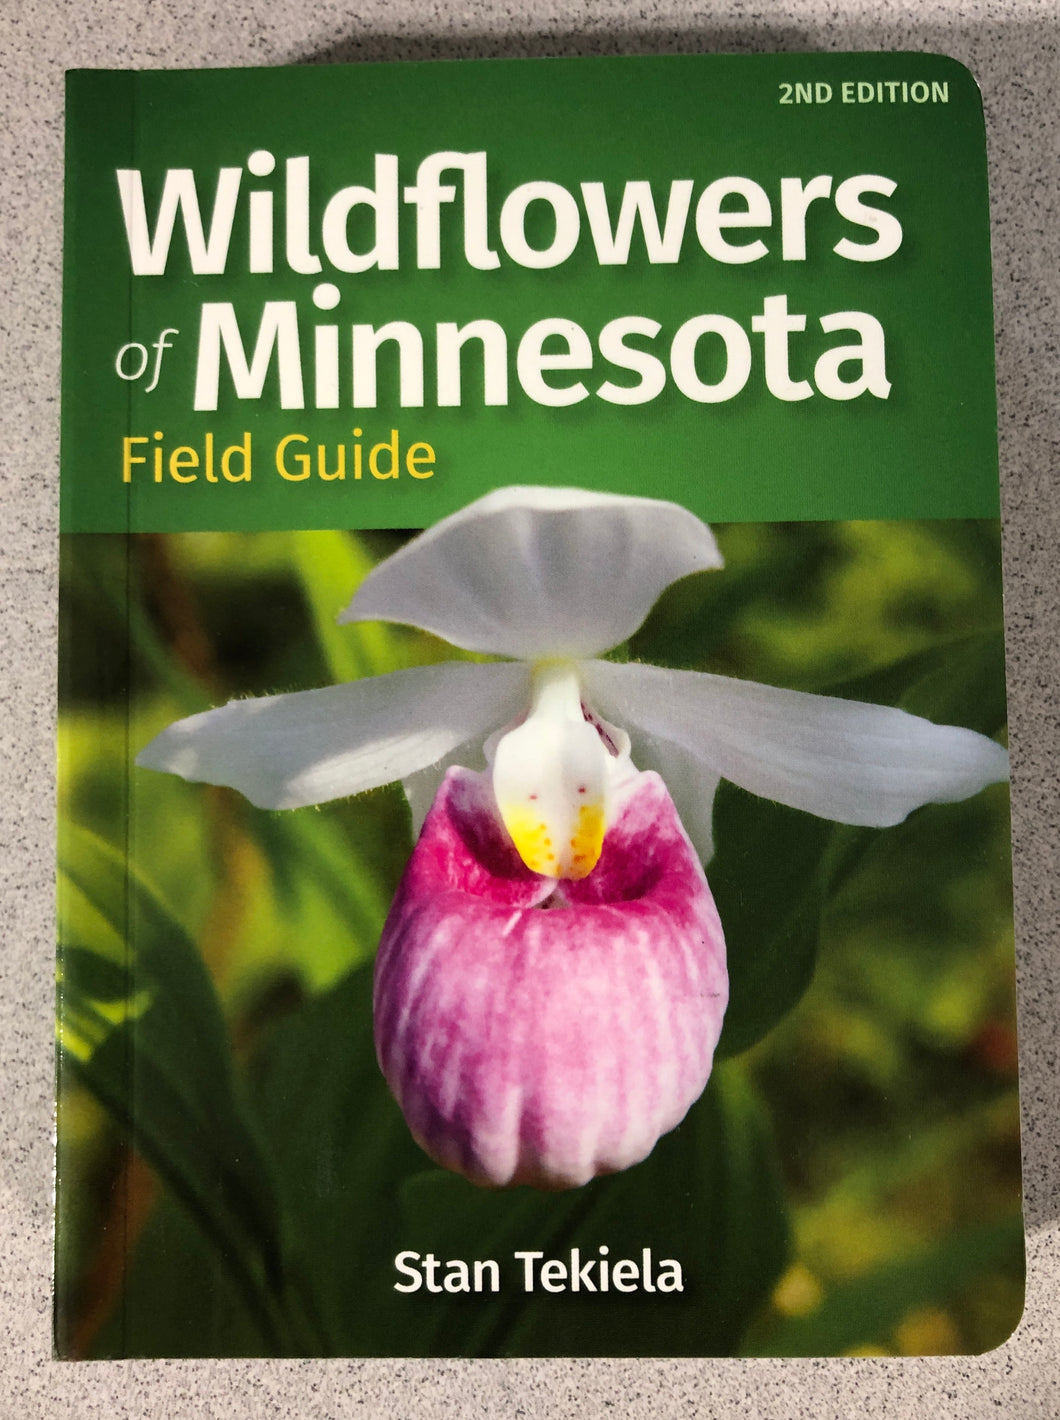 Book:  Wildflowers of Minnesota